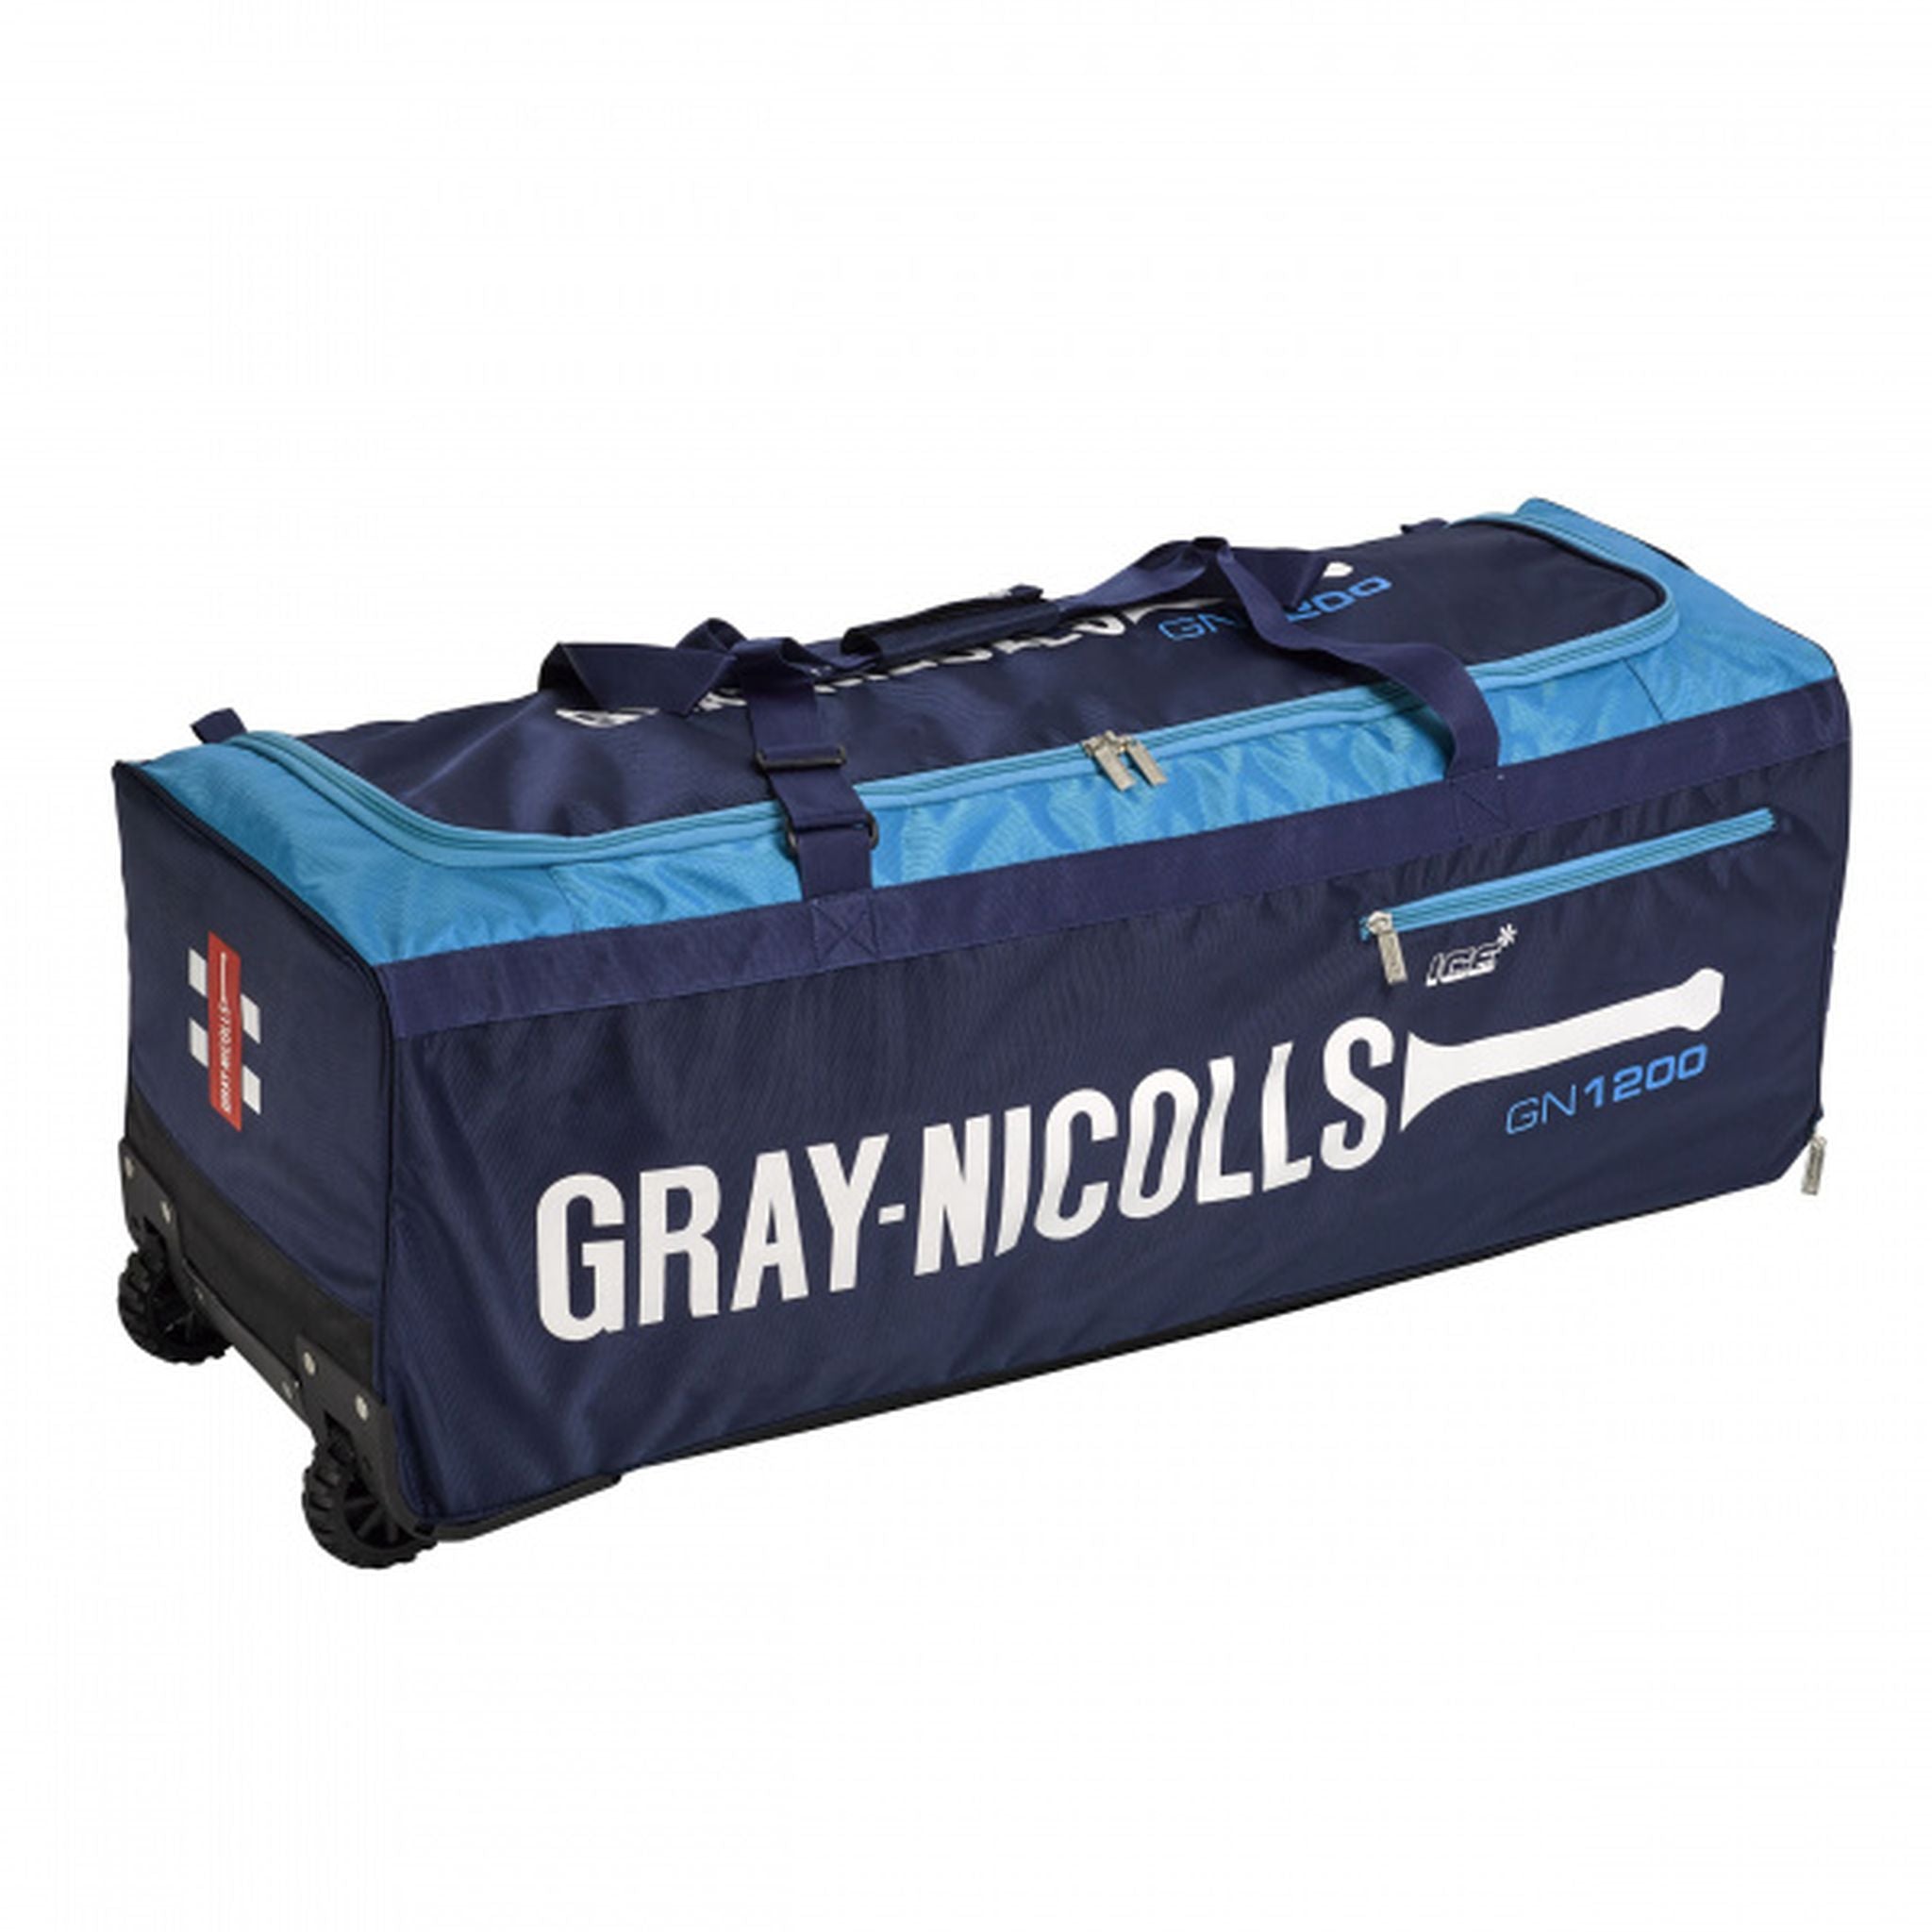 Gray-Nicolls GN 1200 Cricket Wheel Bag